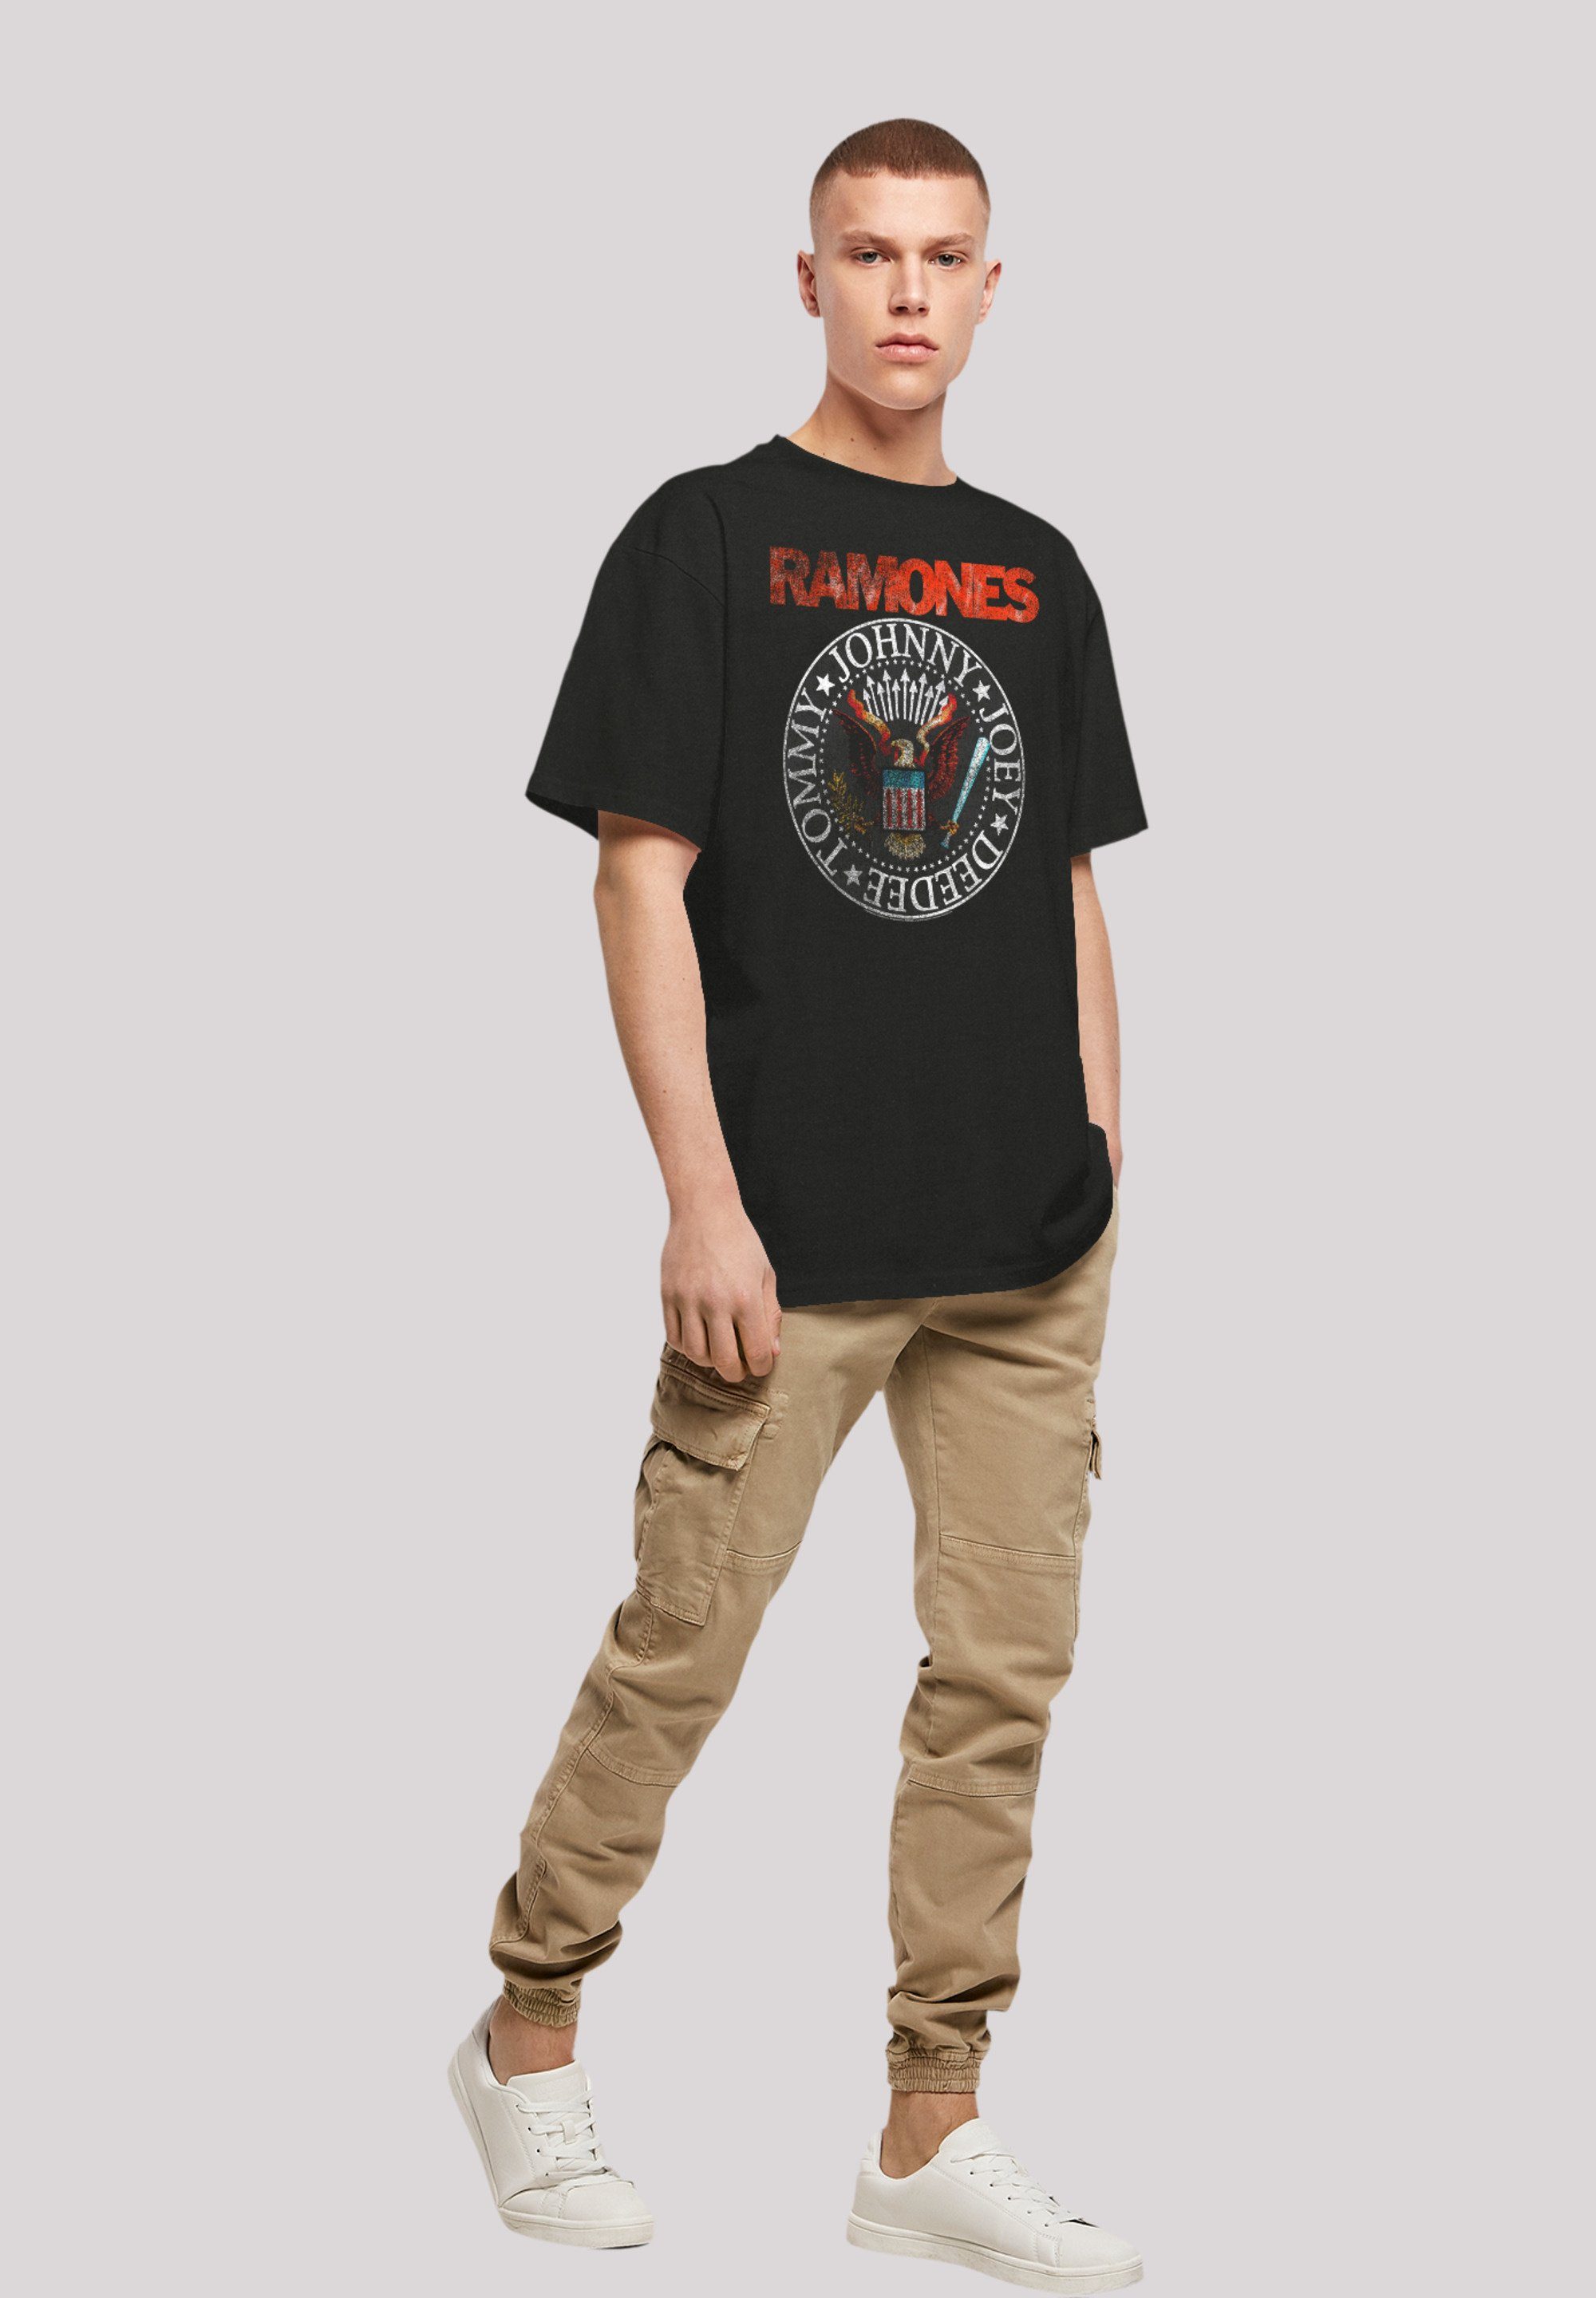 VINTAGE Ramones Rock-Musik T-Shirt Qualität, SEAL Band Premium EAGLE Band, F4NT4STIC Musik Rock schwarz